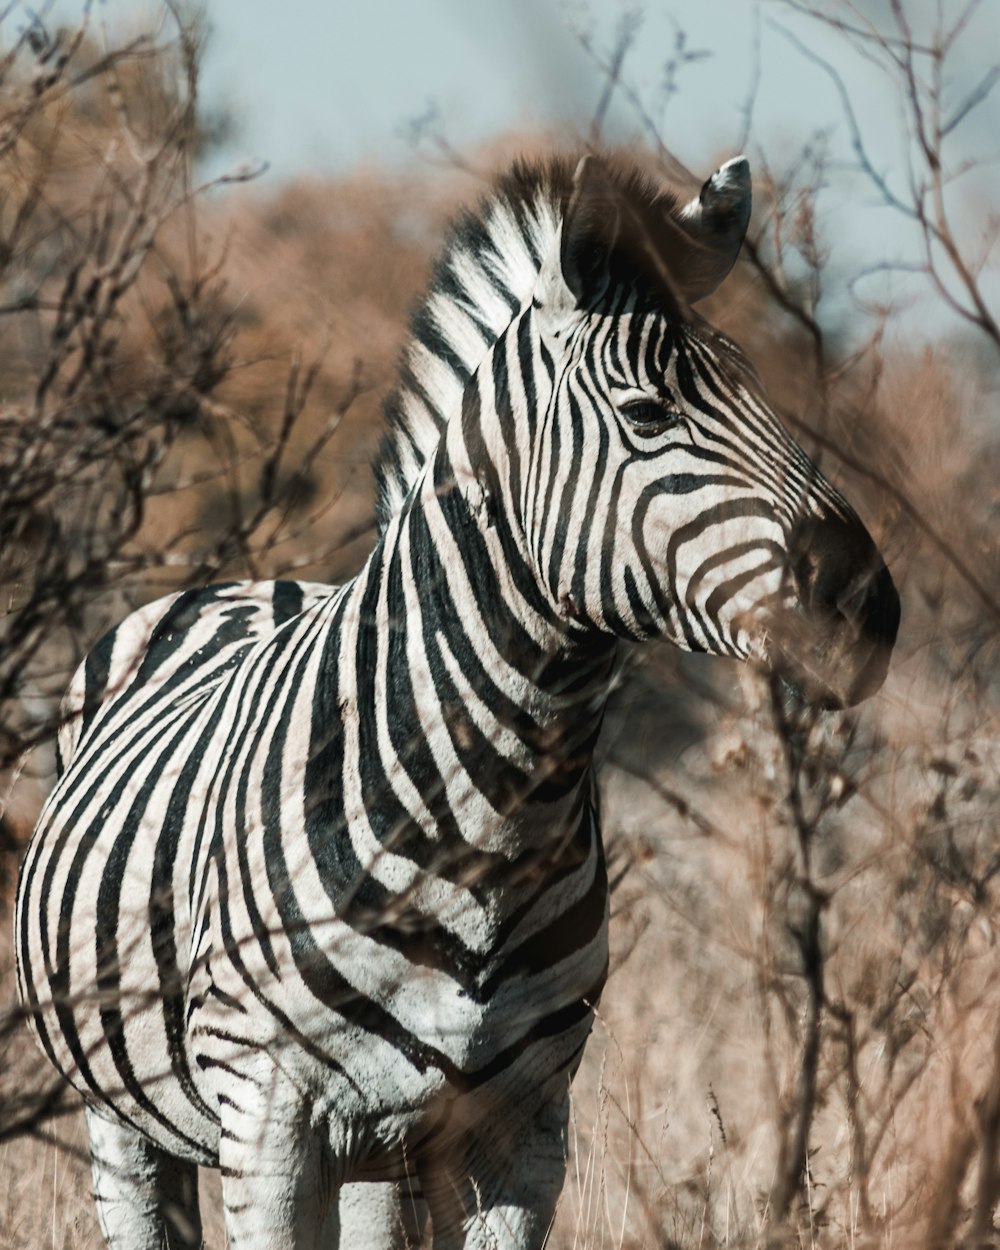 a zebra standing in a dry grass field